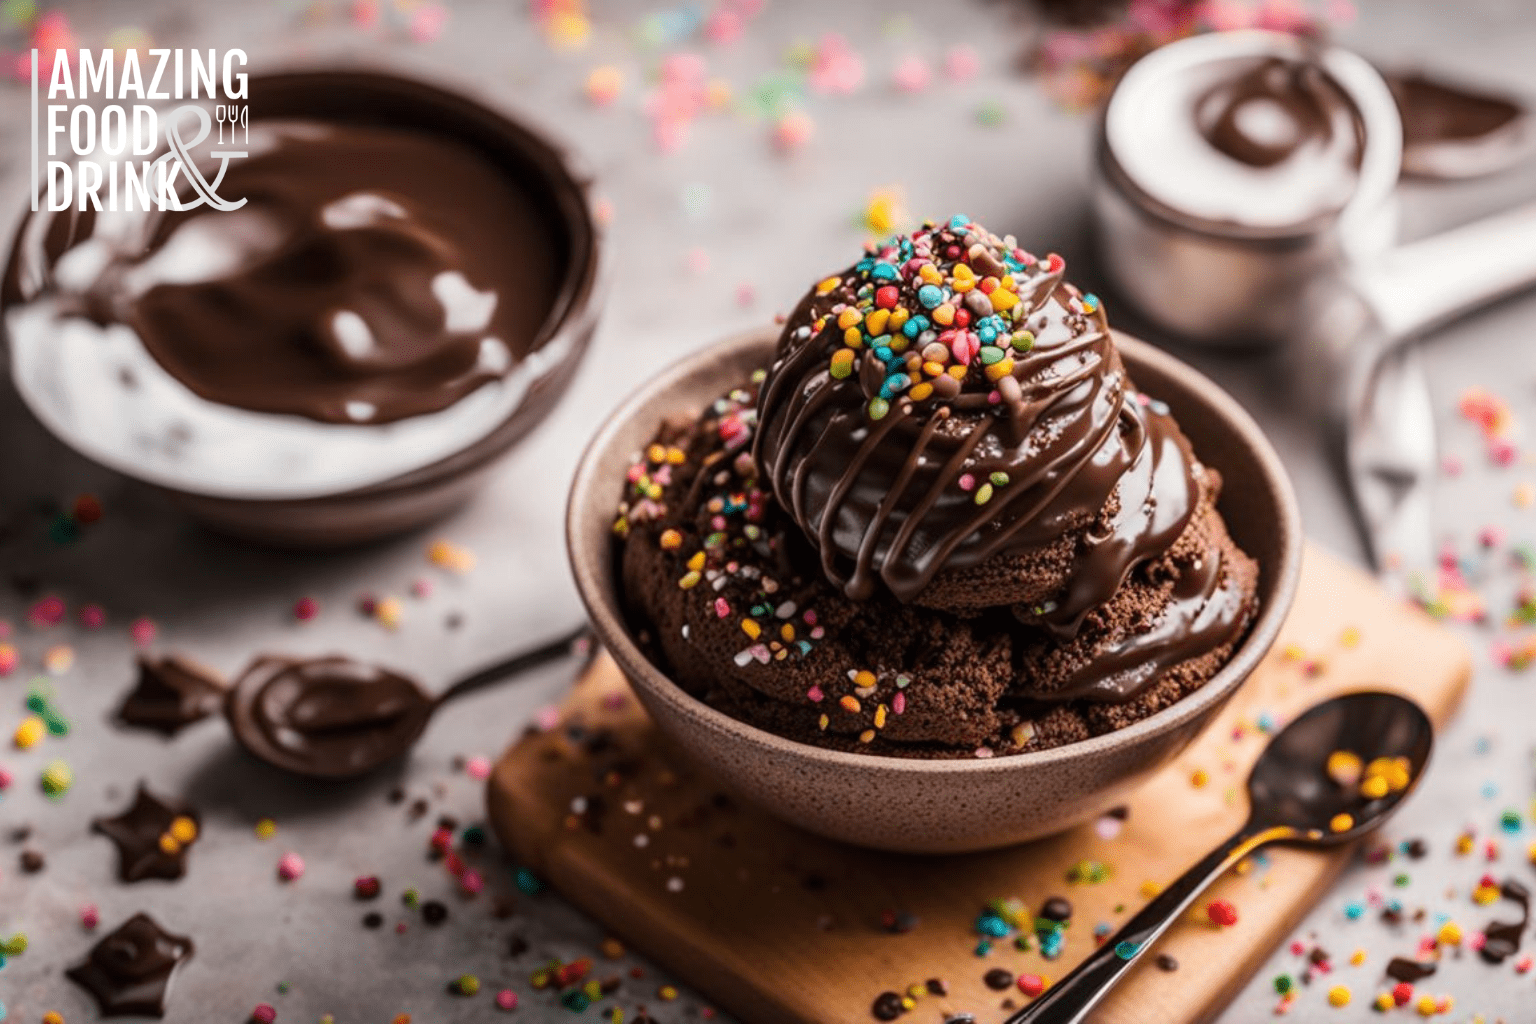 Egg-Free Chocolate Ice Cream Recipe